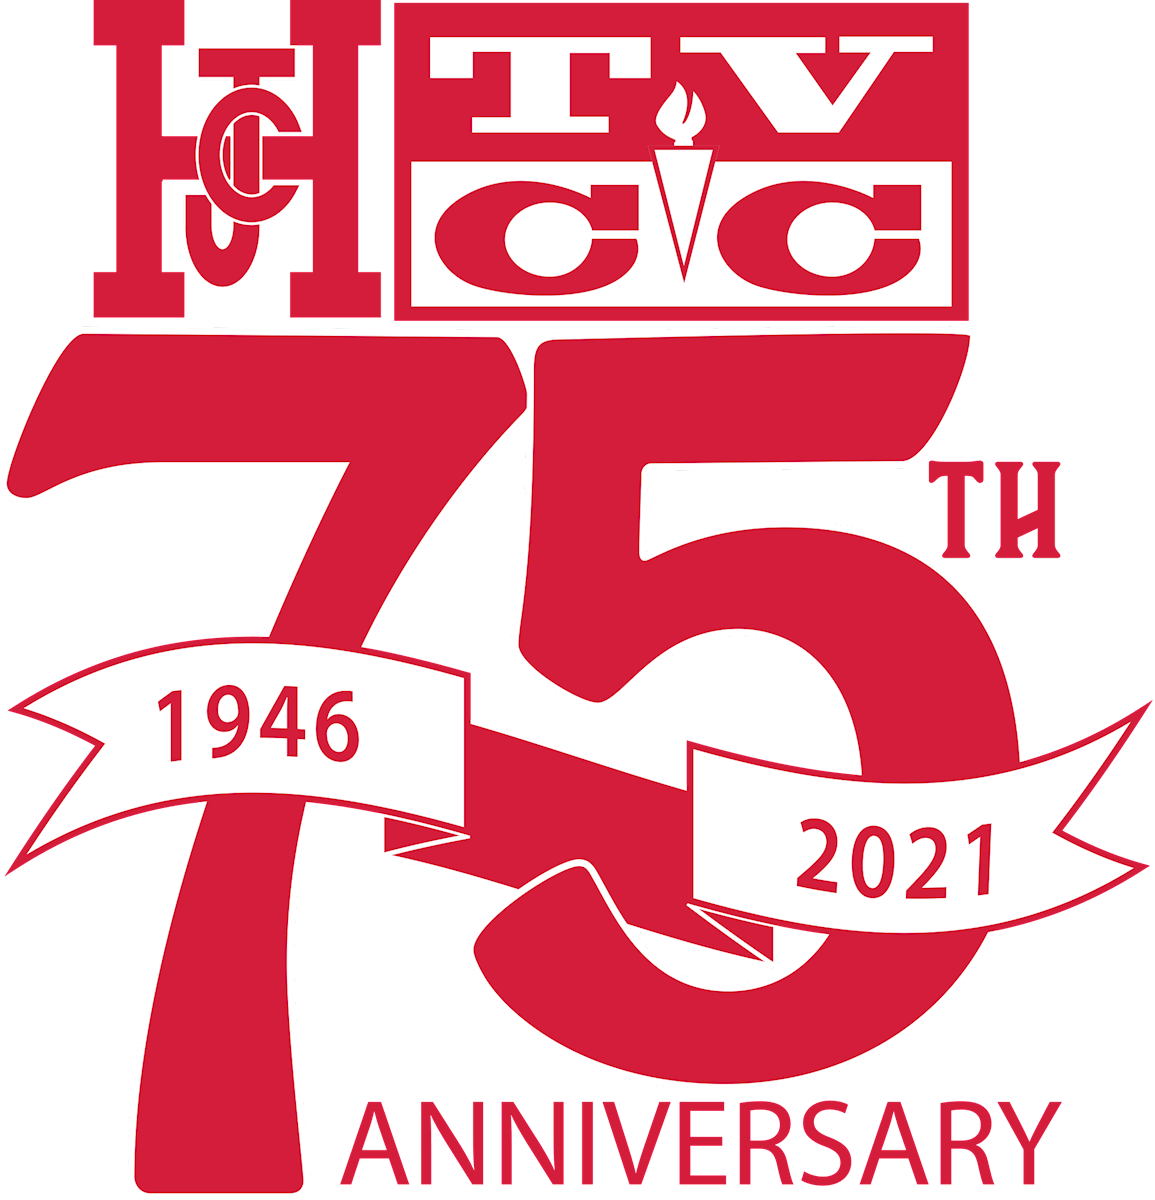 75th anniversary logo                                                                                                                       